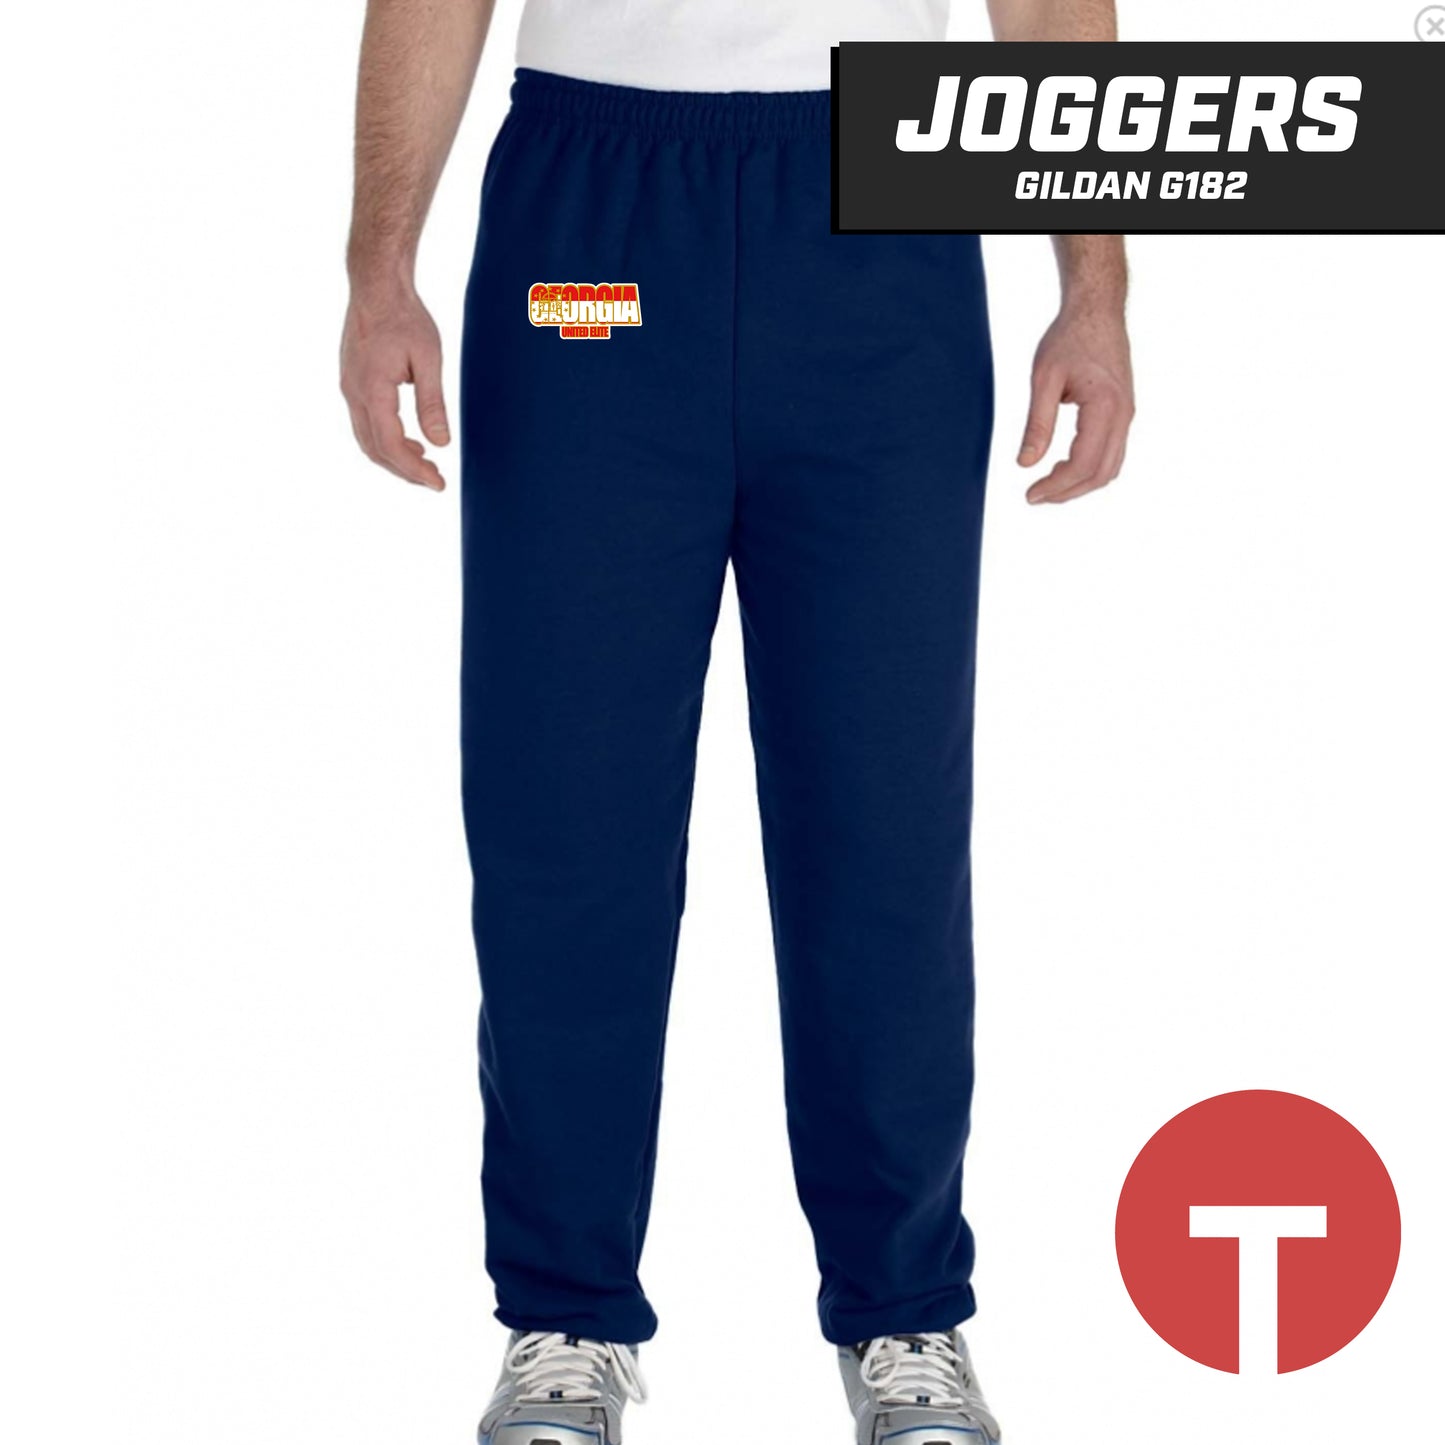 Georgia United Elite - LOGO 2 - Jogger pants Gildan G182